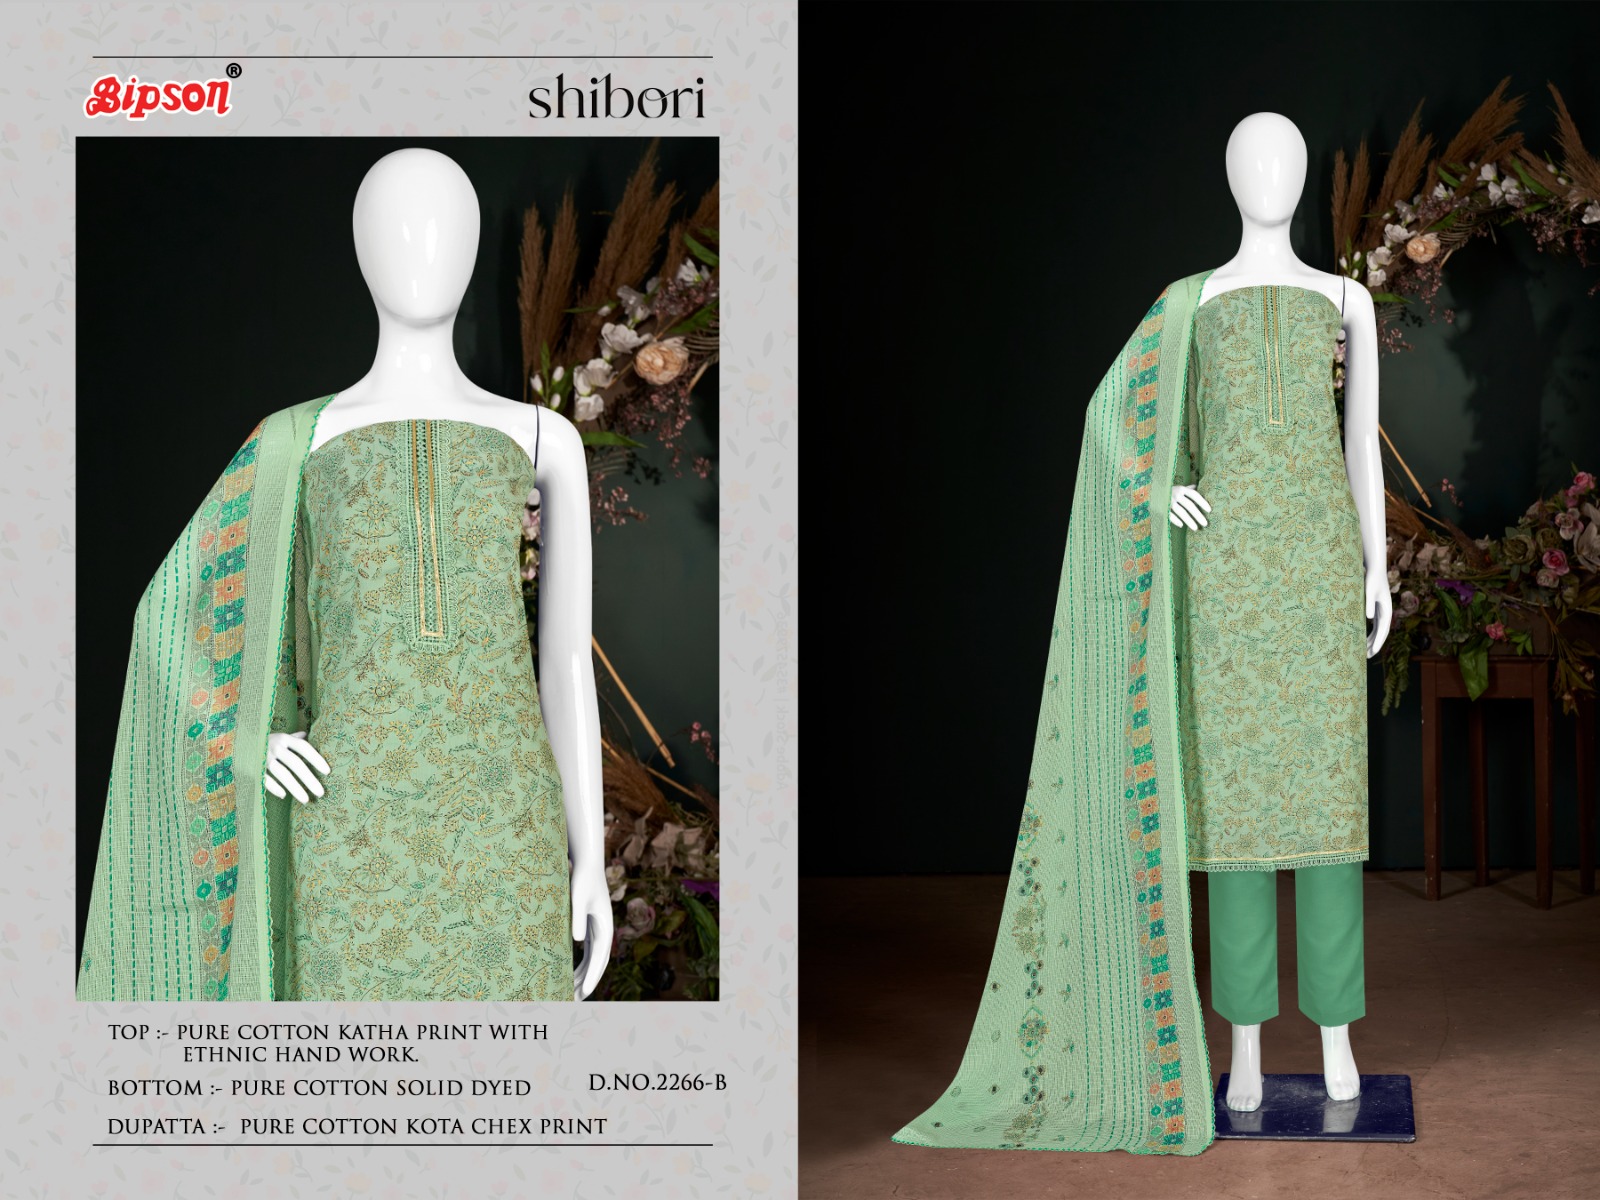 bipson shibori 2266 cotton catchy look salwar suit catalog